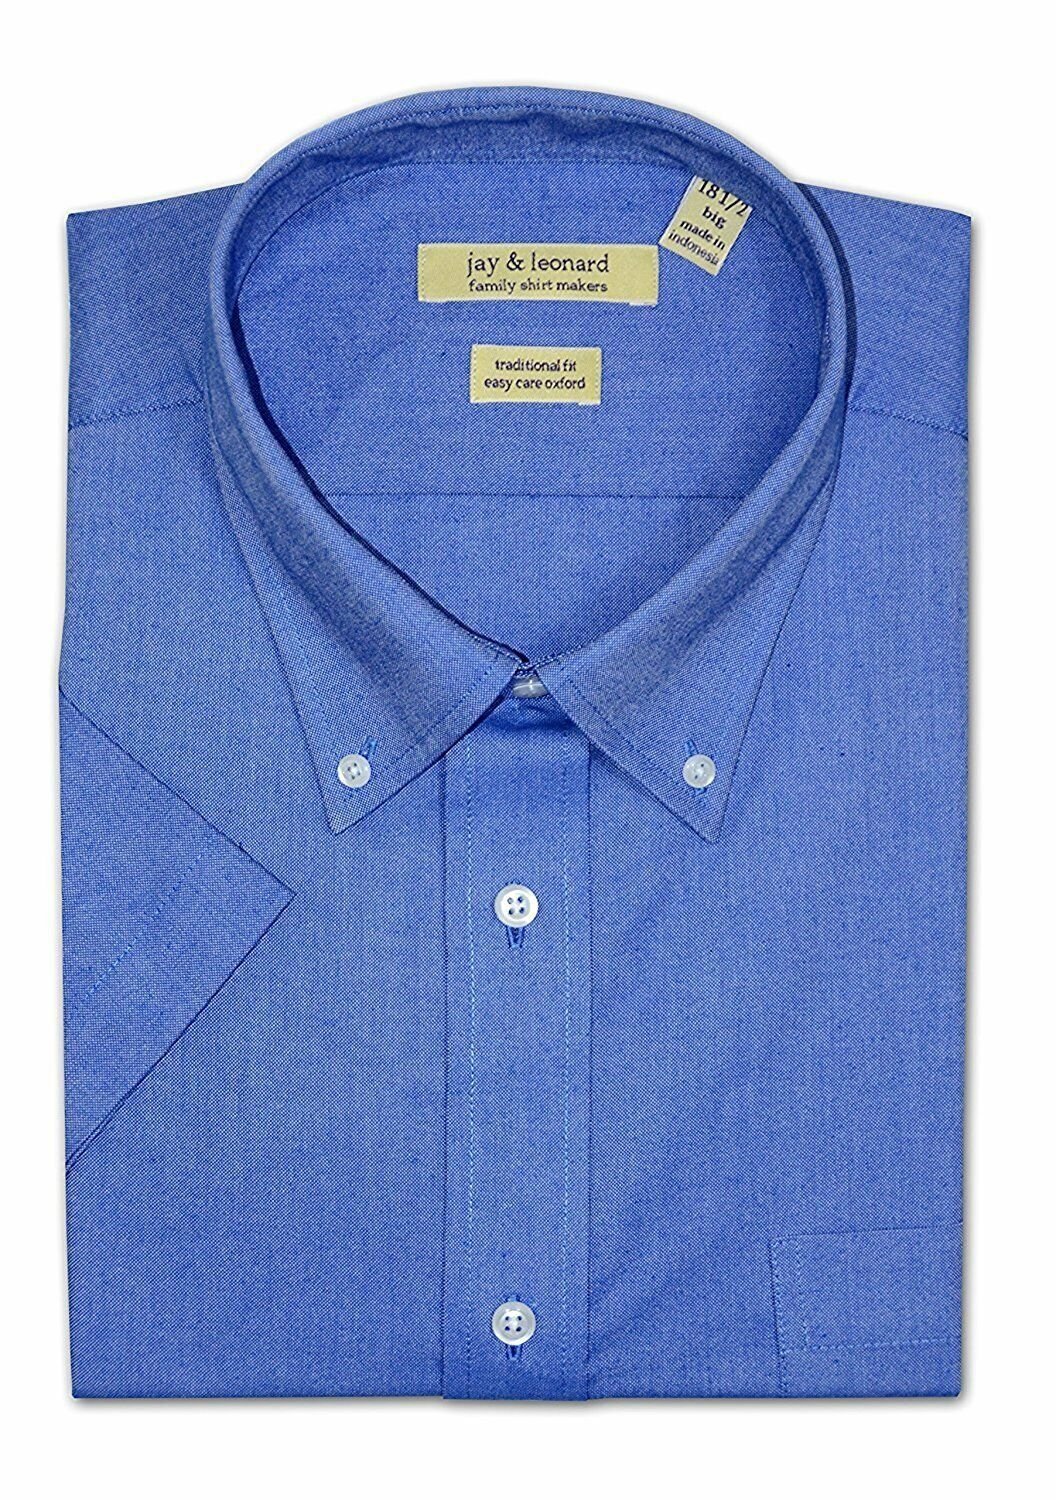 Modena Men’s Oxford Button Down Short Sleeve Dress Shirt (Including Big & Tall) - CLEARANCE, FINAL SALE!